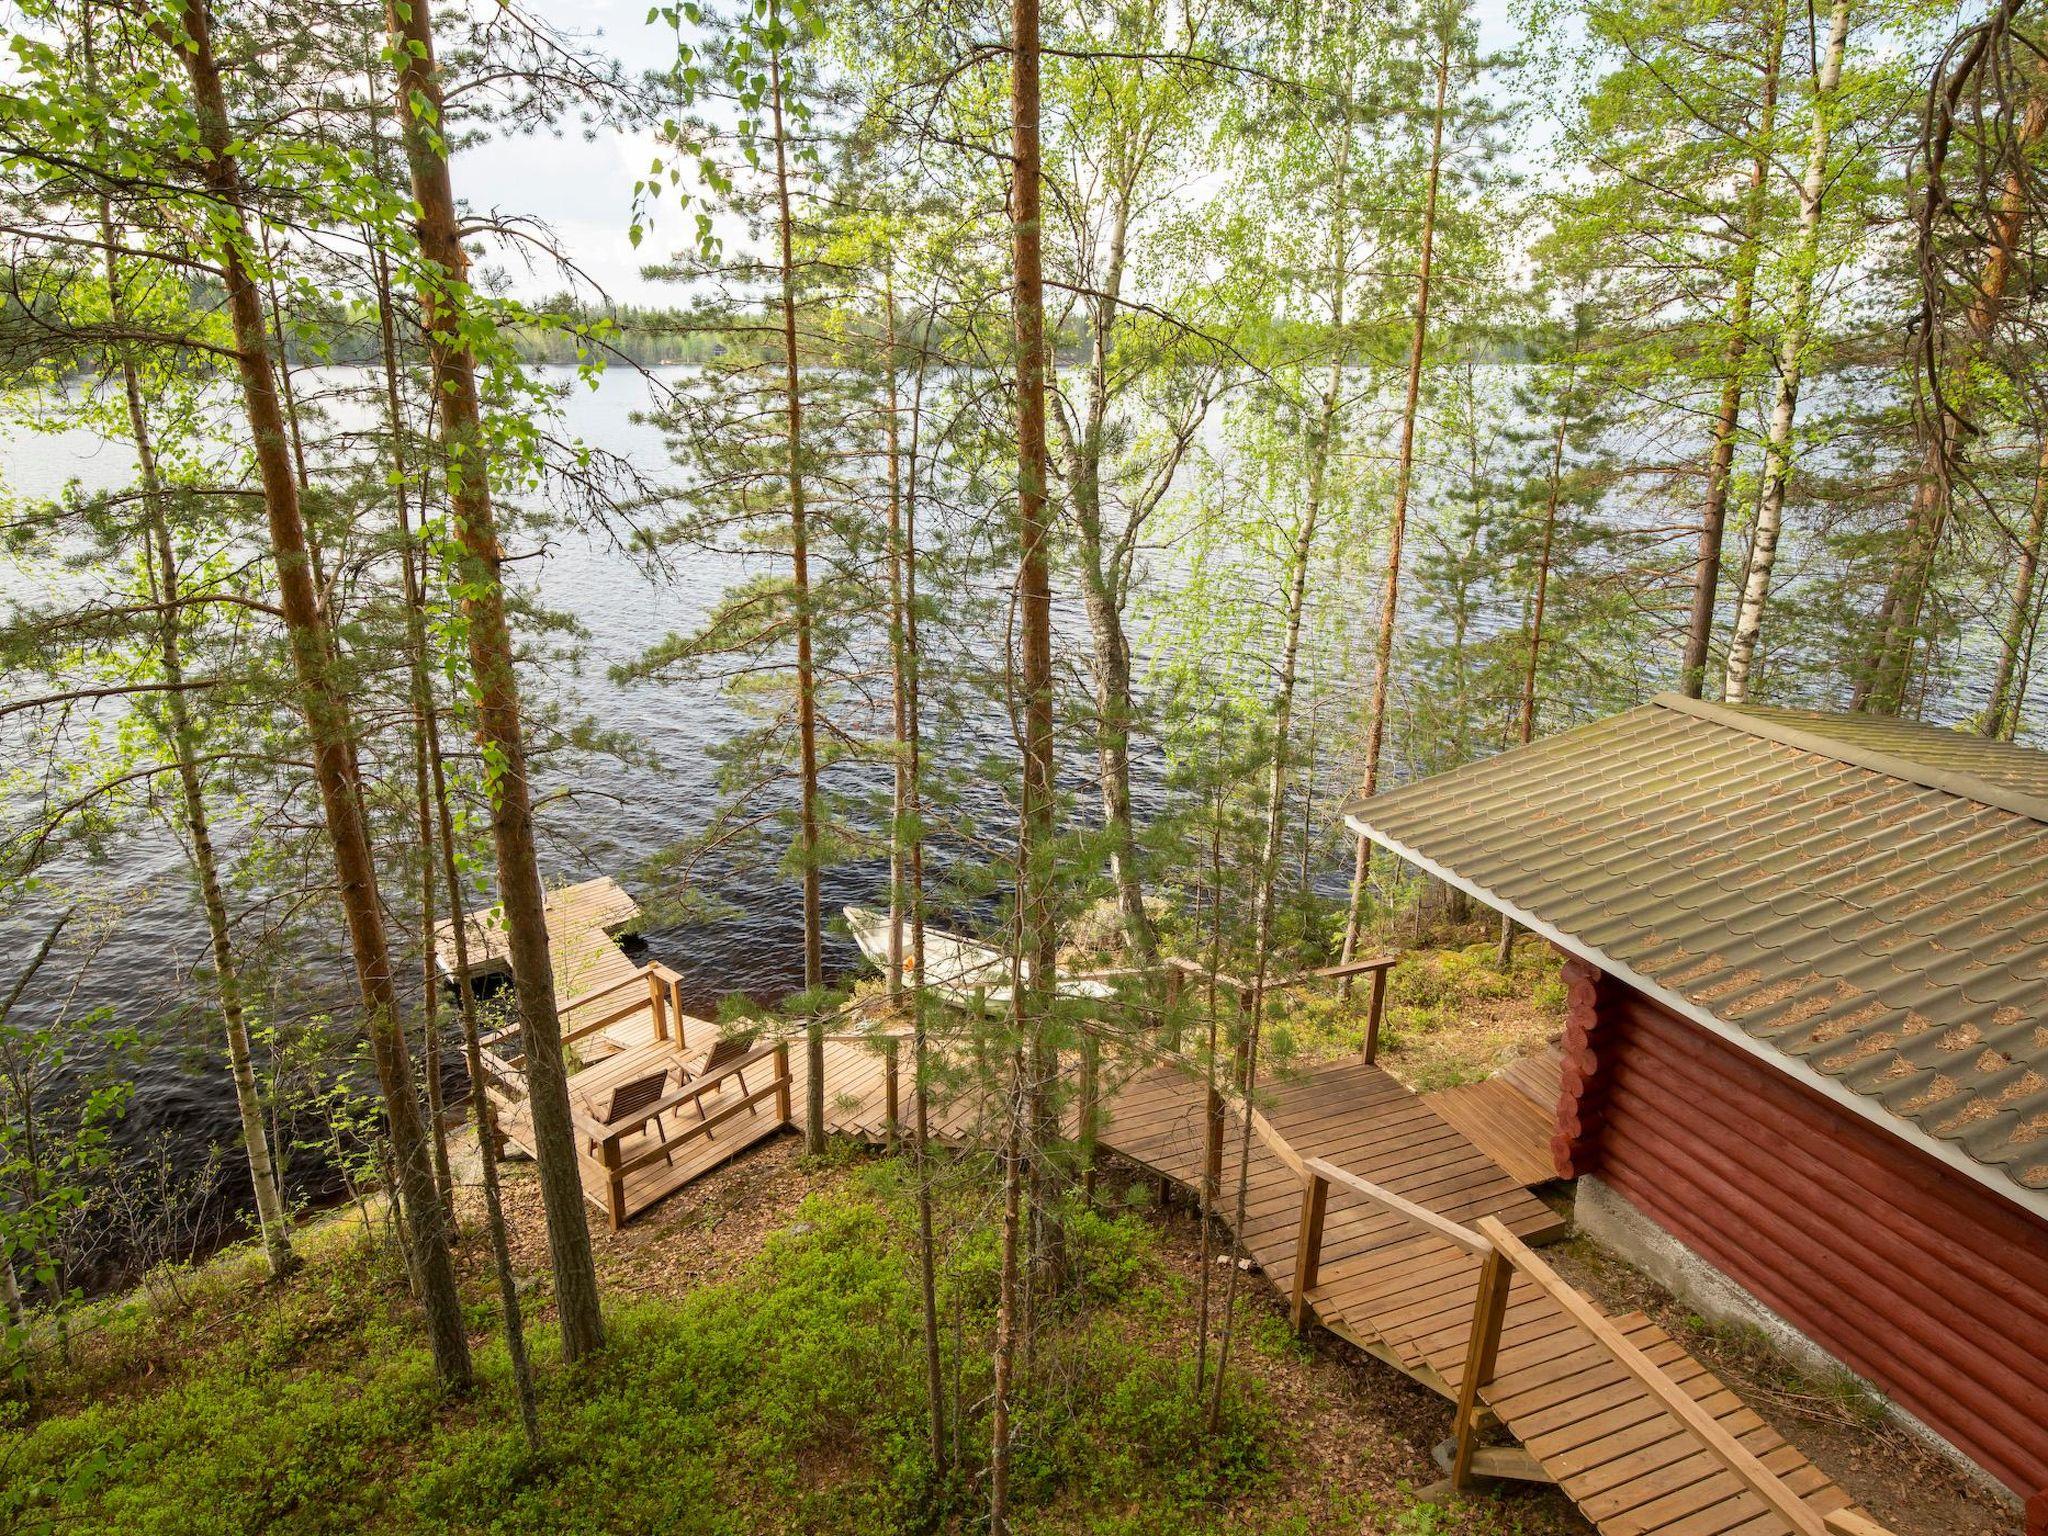 Photo 6 - 2 bedroom House in Mikkeli with sauna